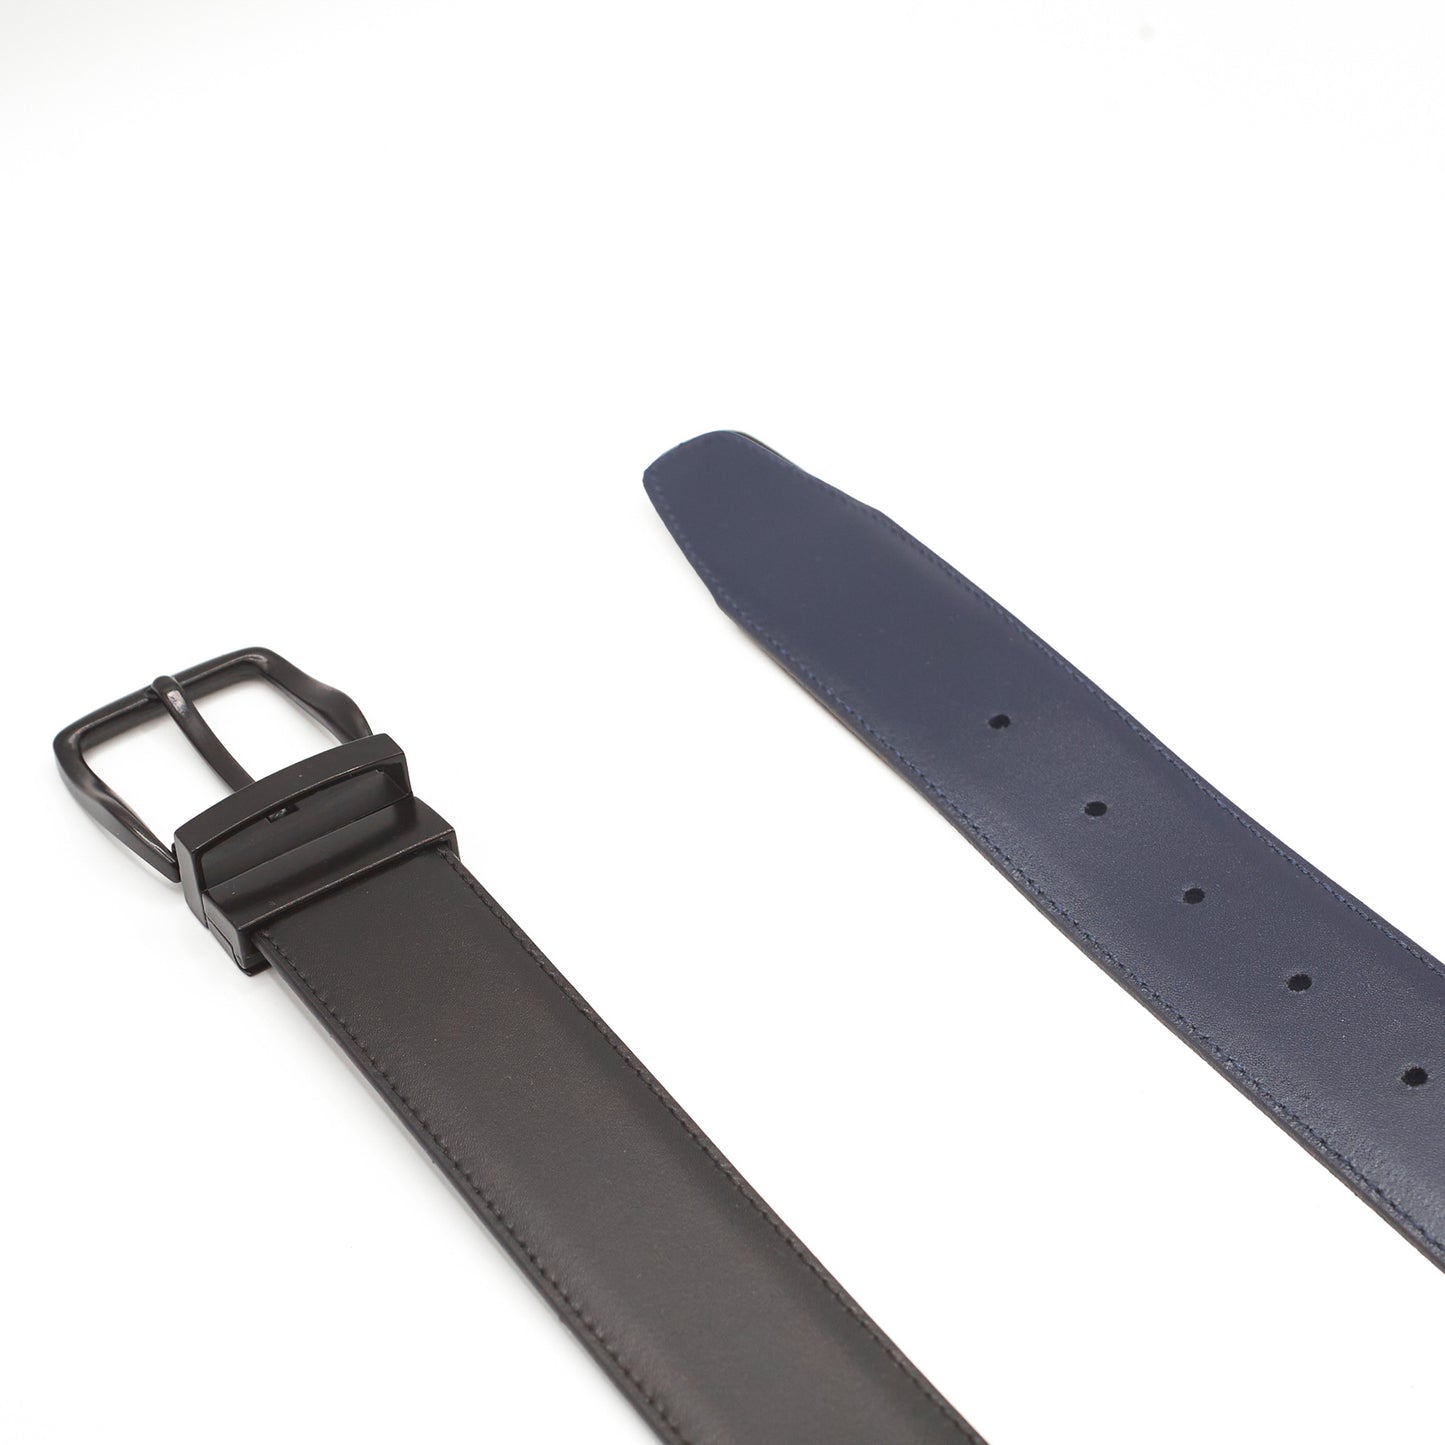 Cinture D'autore - Cintura reversibile 2 in 1 con Fibbia Nera opaca - Cintura in Vera Pelle 100% Made in Italy.